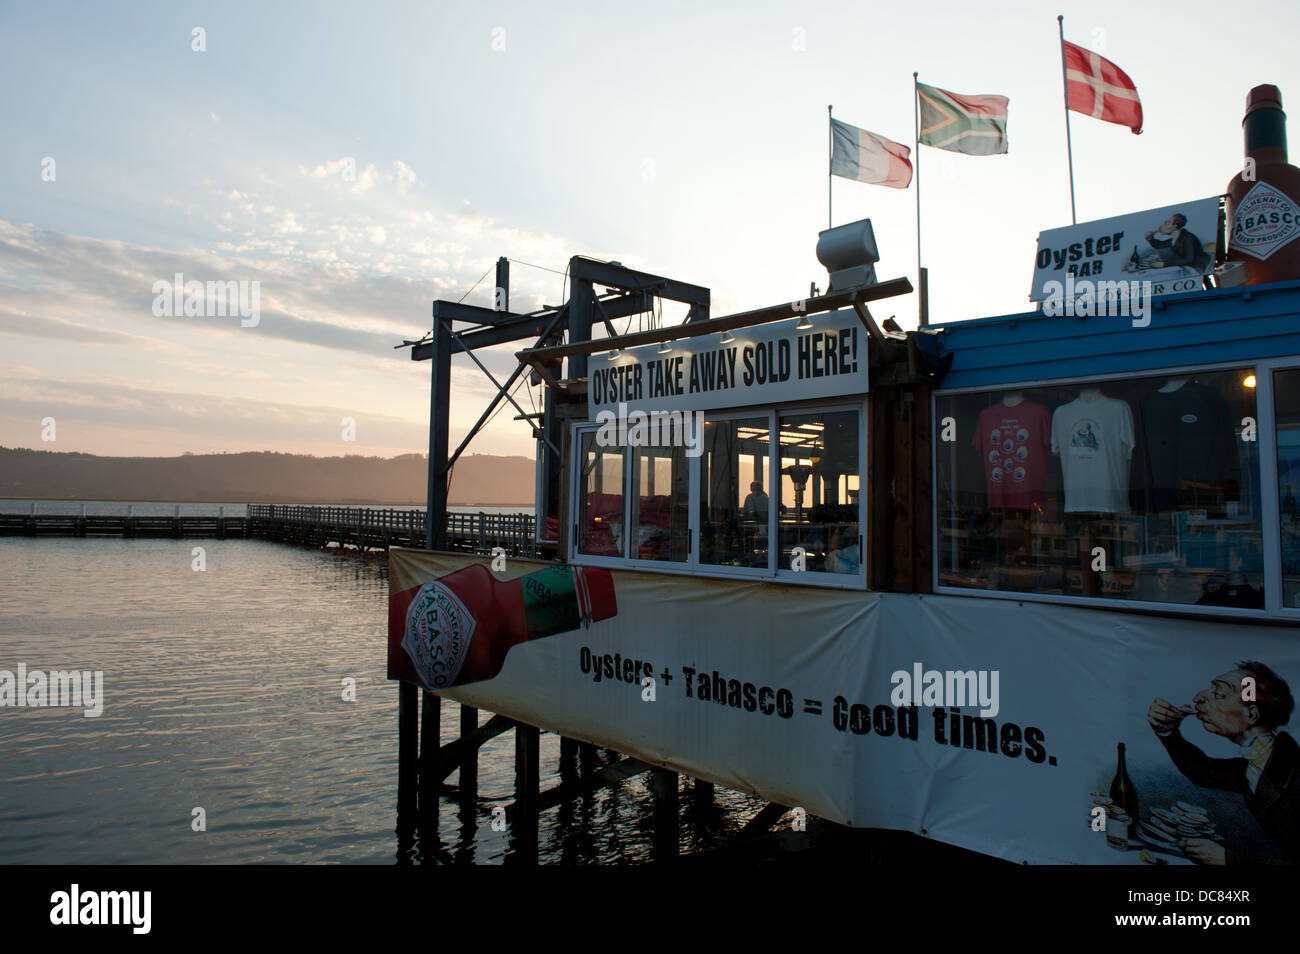 Oyster bar, Knysna waterfront, Knysna, Western Cape, South Africa Stock Photo